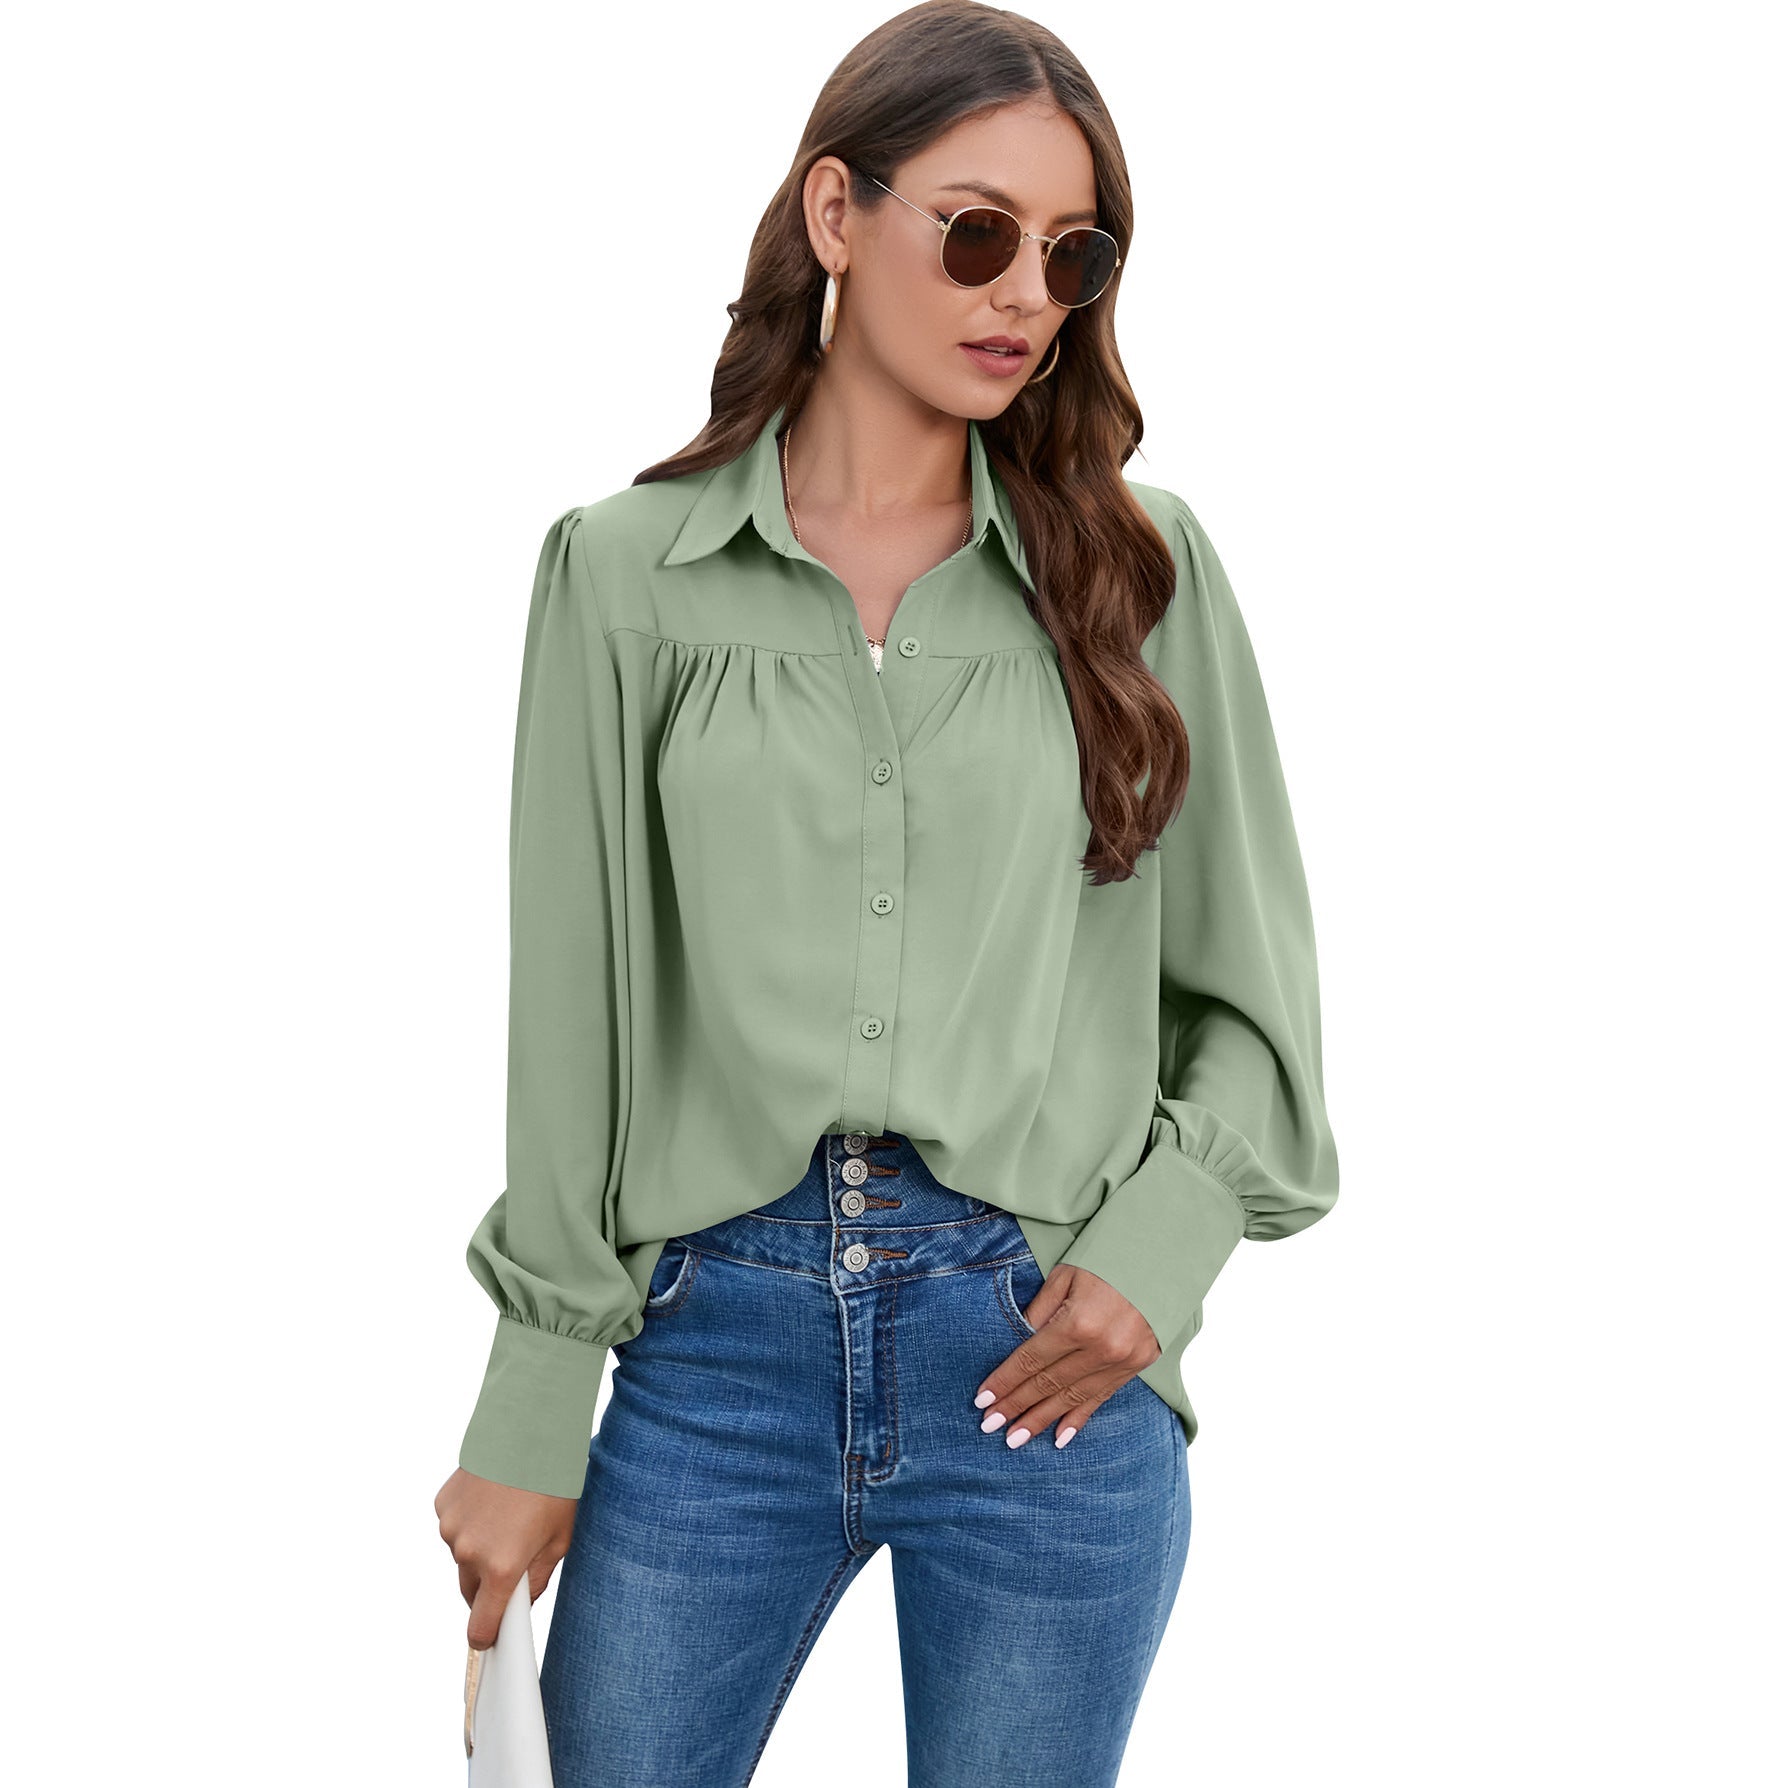 Casual Chiffon Long Sleeves Blouses for Women-Shirts & Tops-Bean Green-S-Free Shipping at meselling99